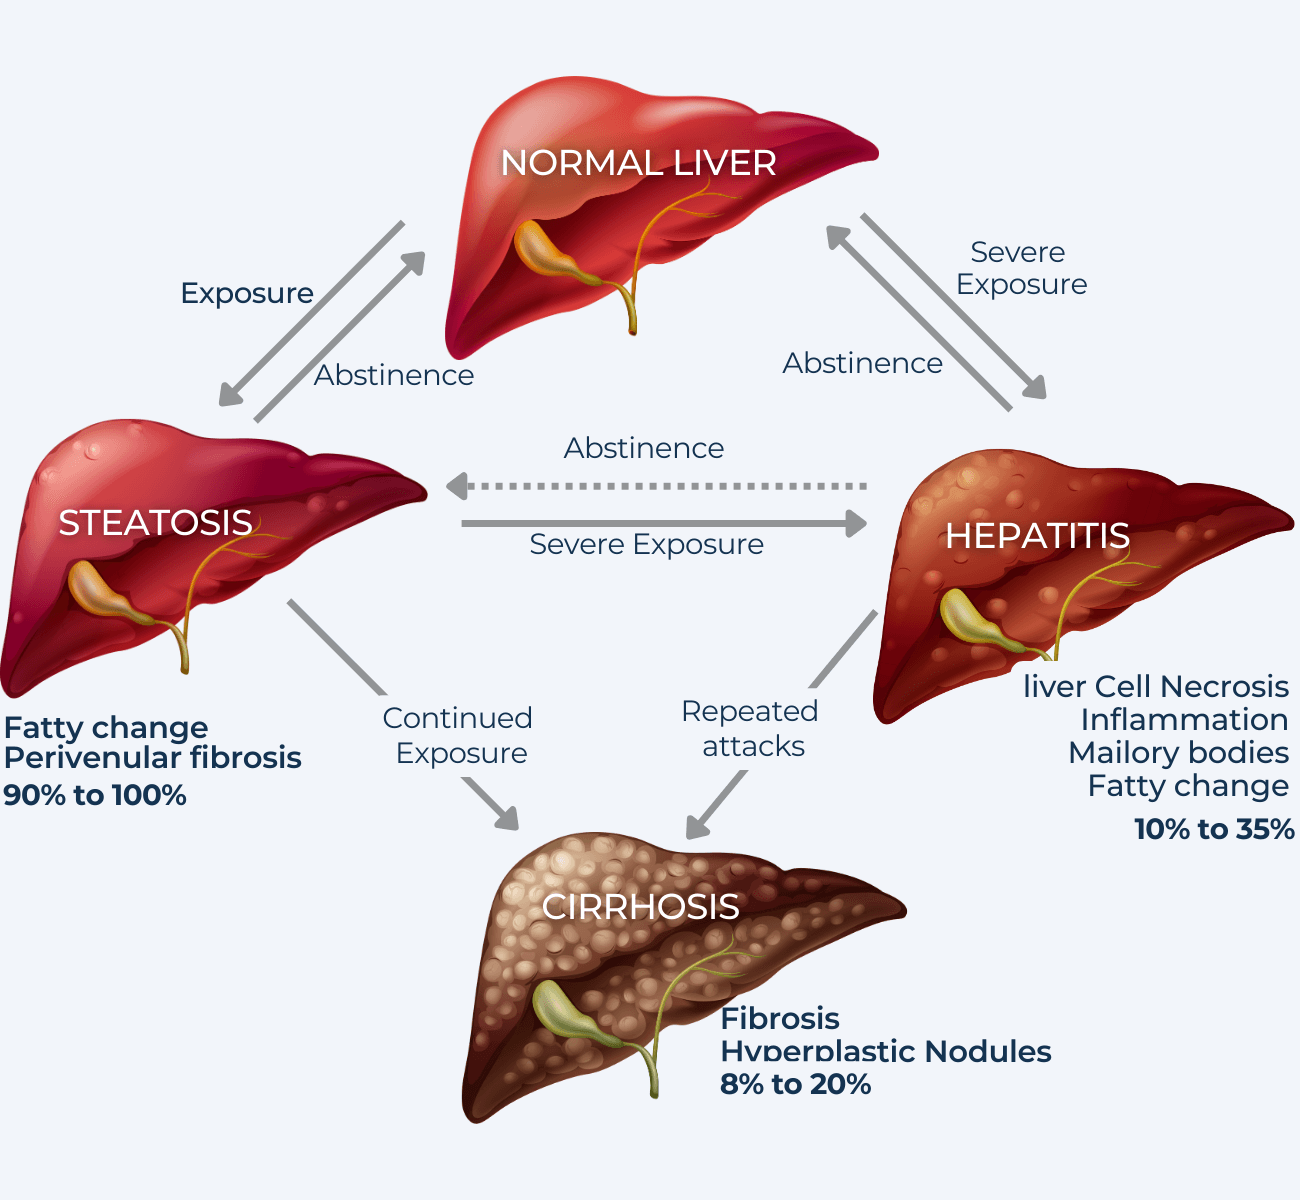 Illustration of the Stages of Liver Damage